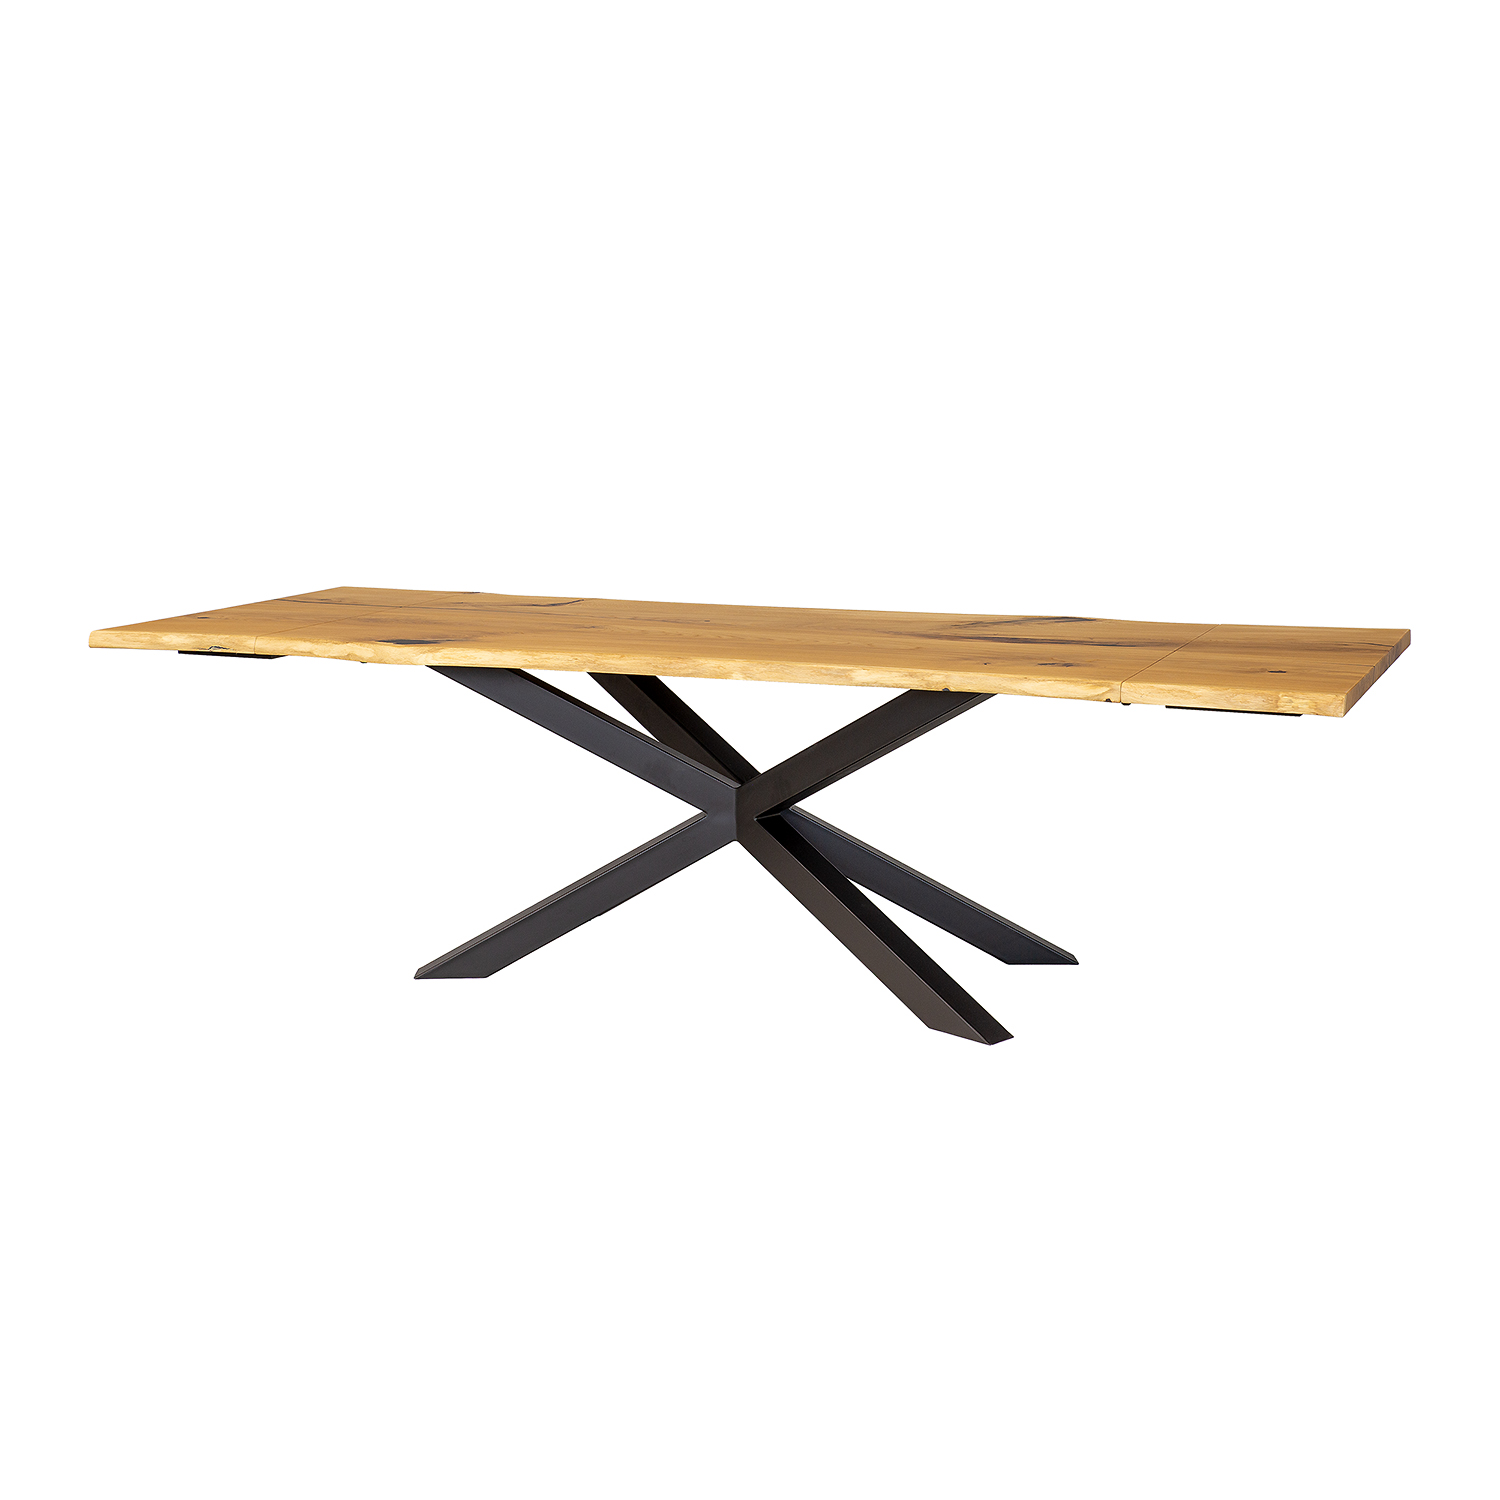 metal-oak table is a unique piece of furniture